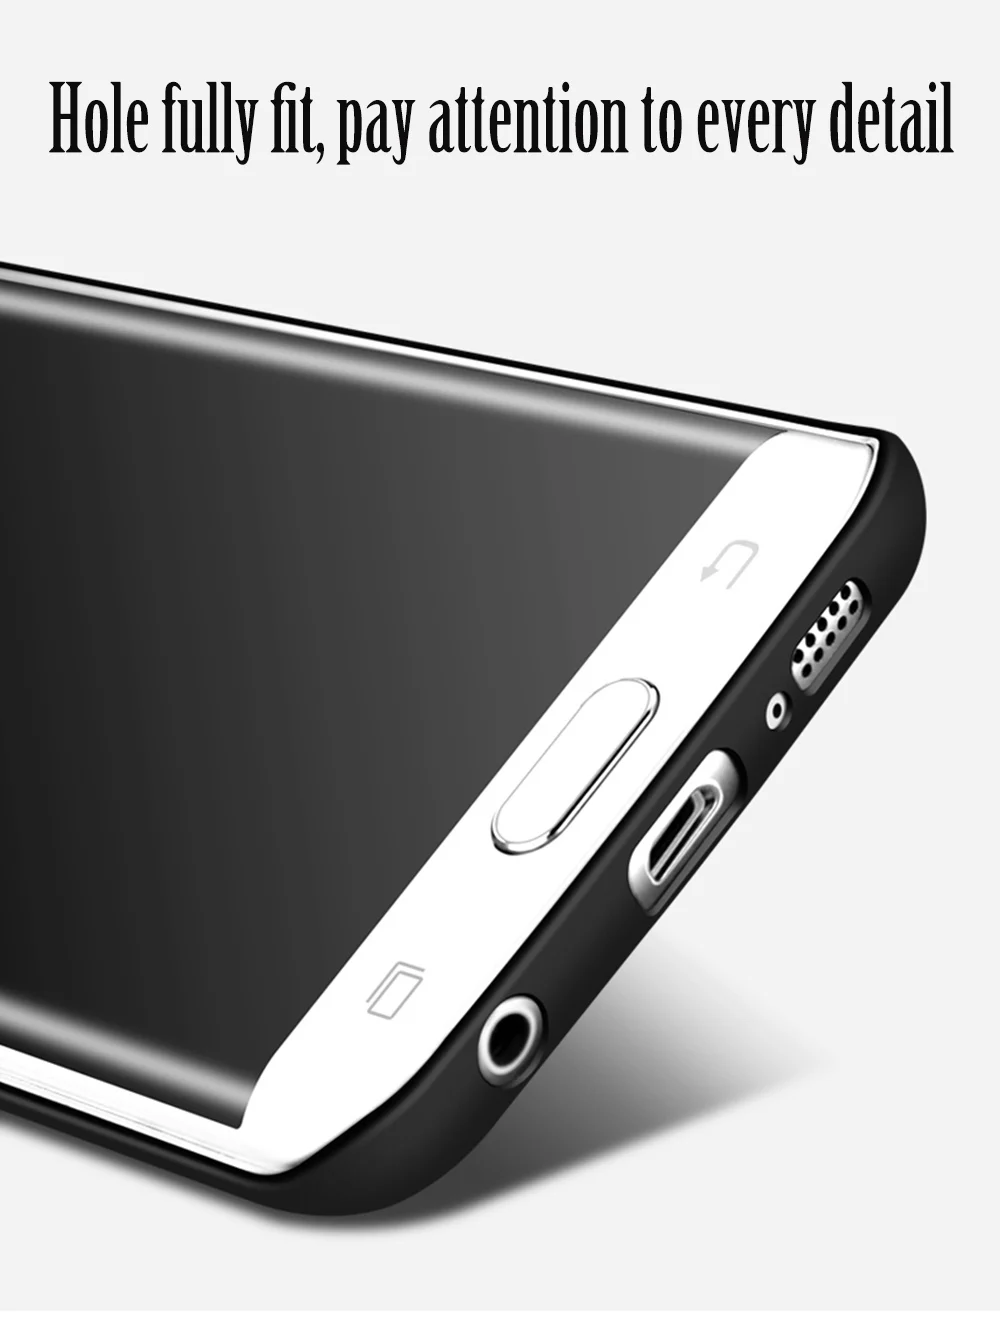 Жесткий Тонкий чехол из поликарбоната для samsung Galaxy S8 plus S7 S6 edge Plus S3 S5 neo S4 Note 2 3 4 5 Note 8 grand prime G530